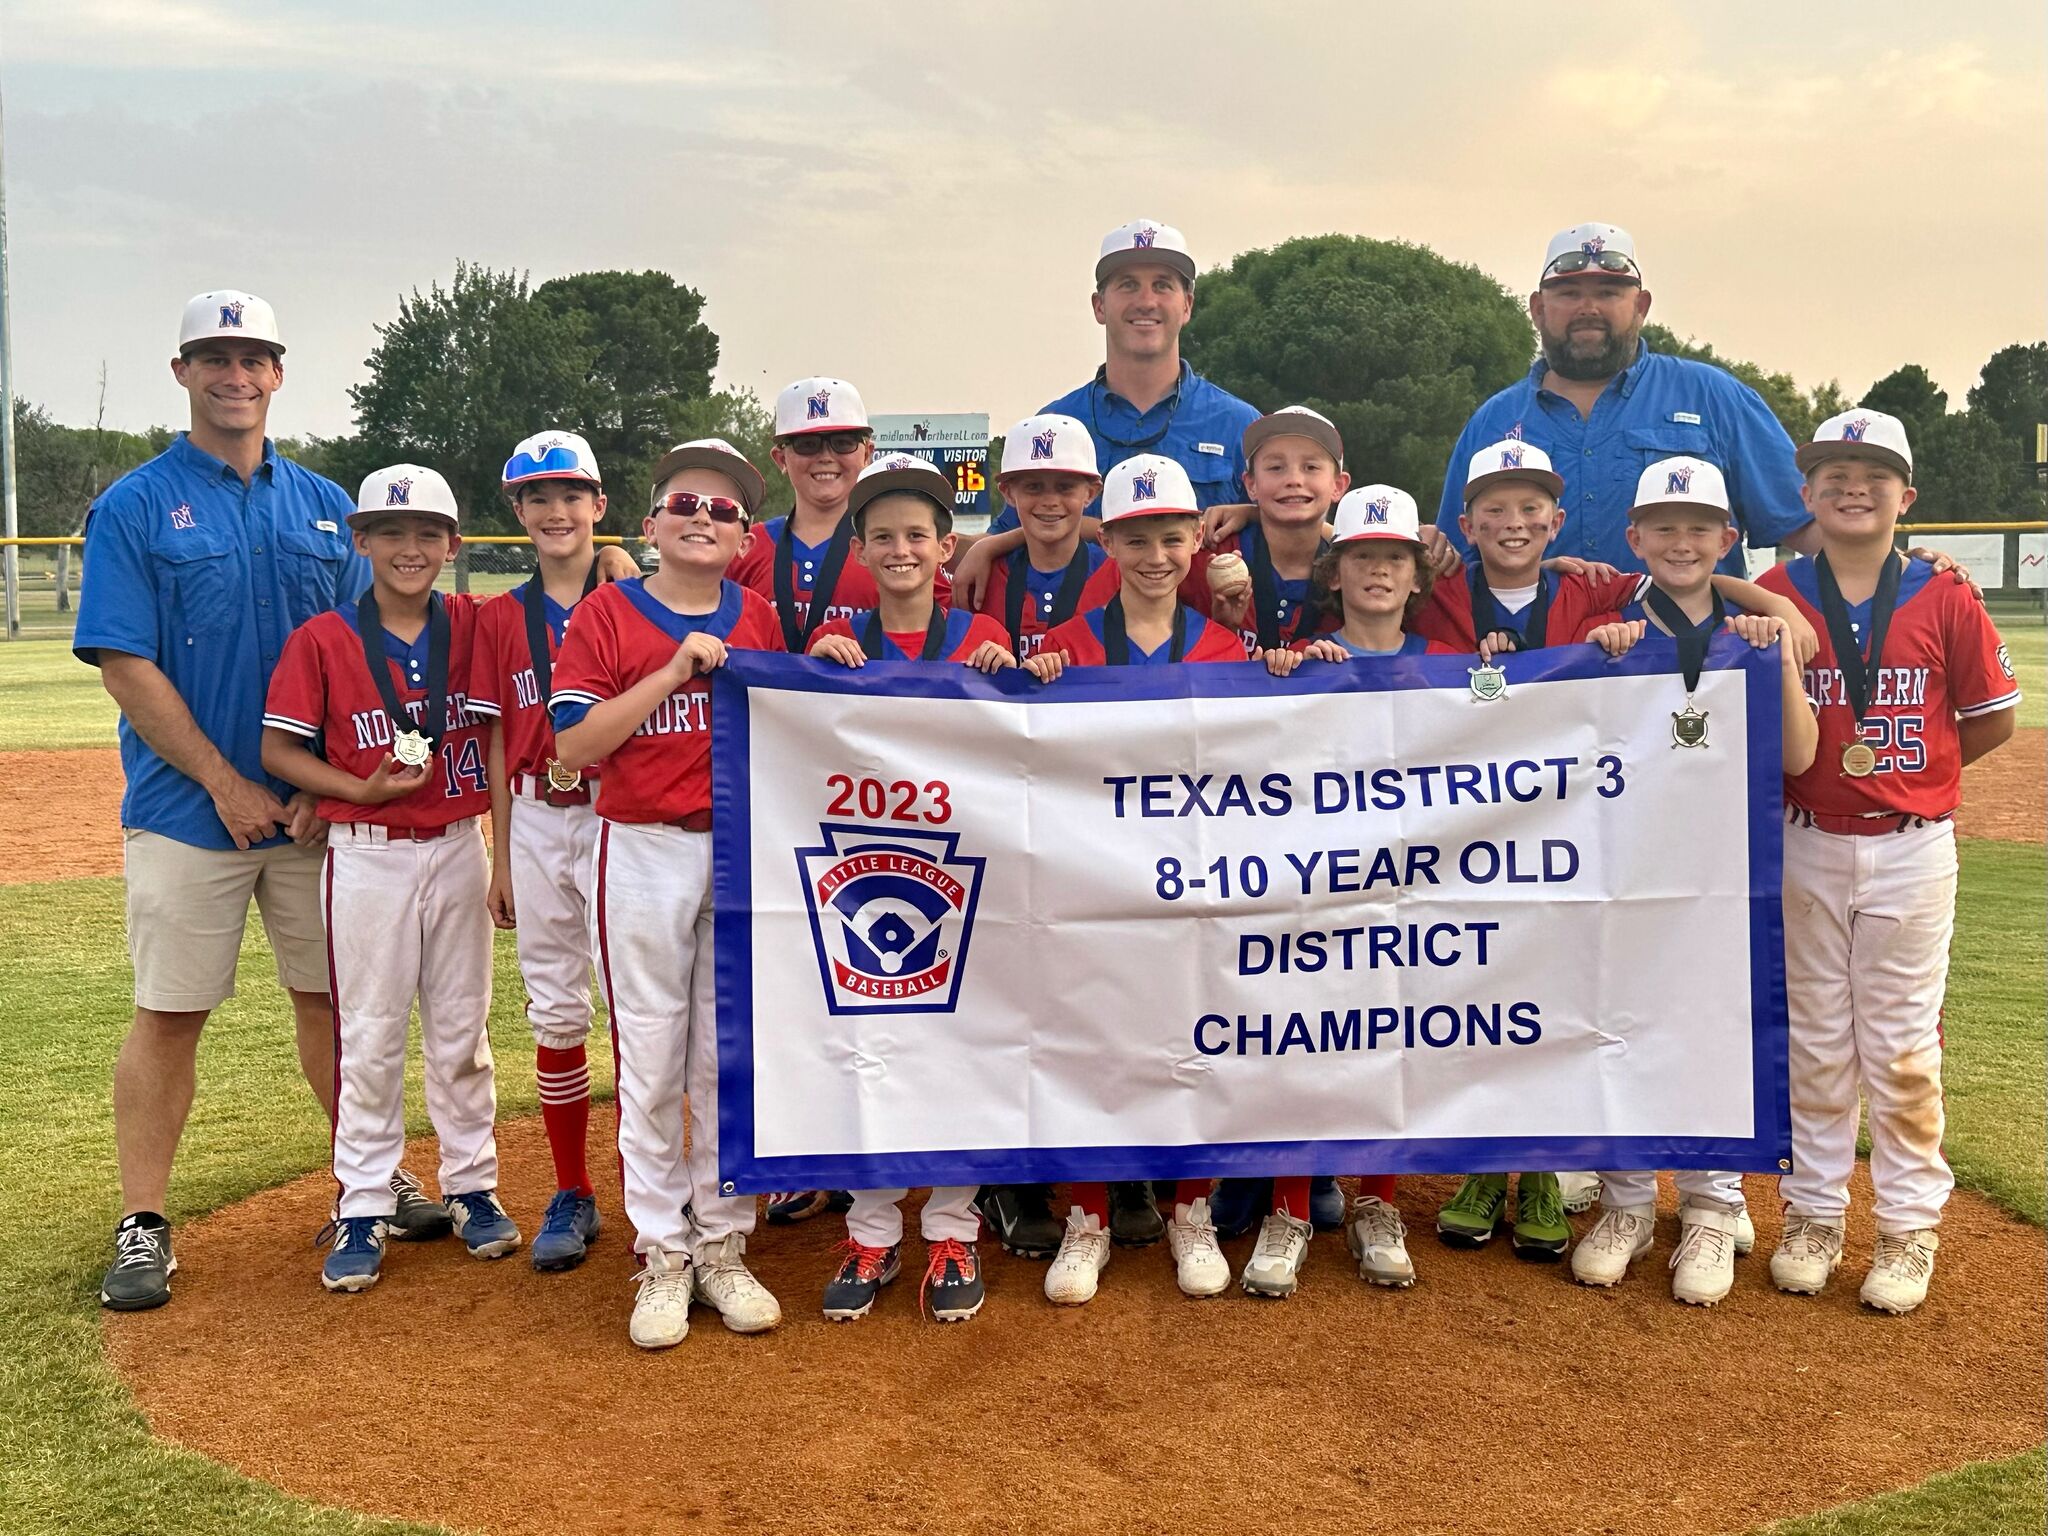 Area youth baseball team wins national championship